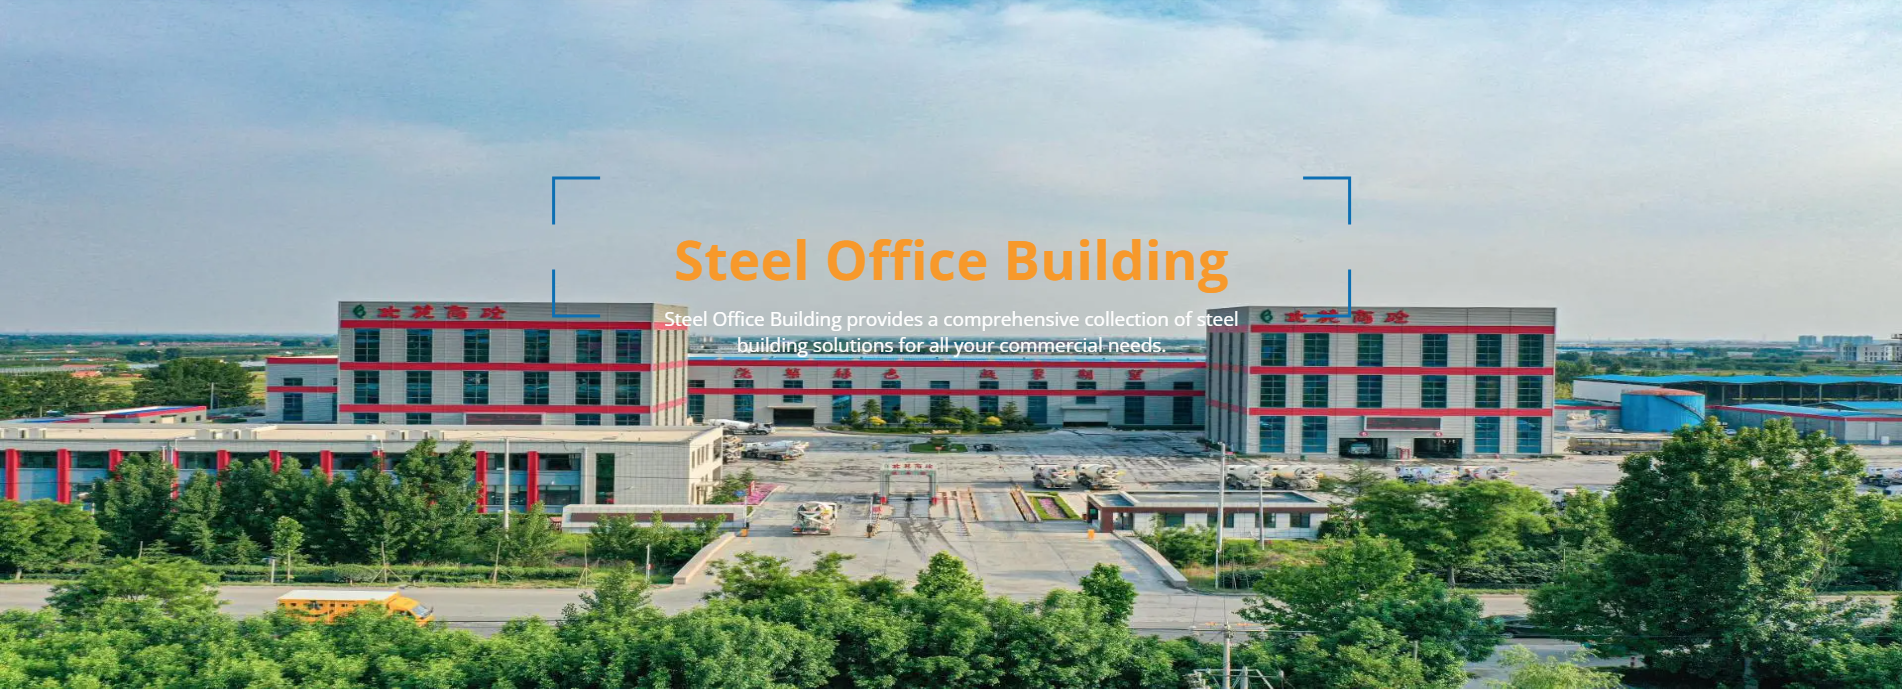 Steel Office Building